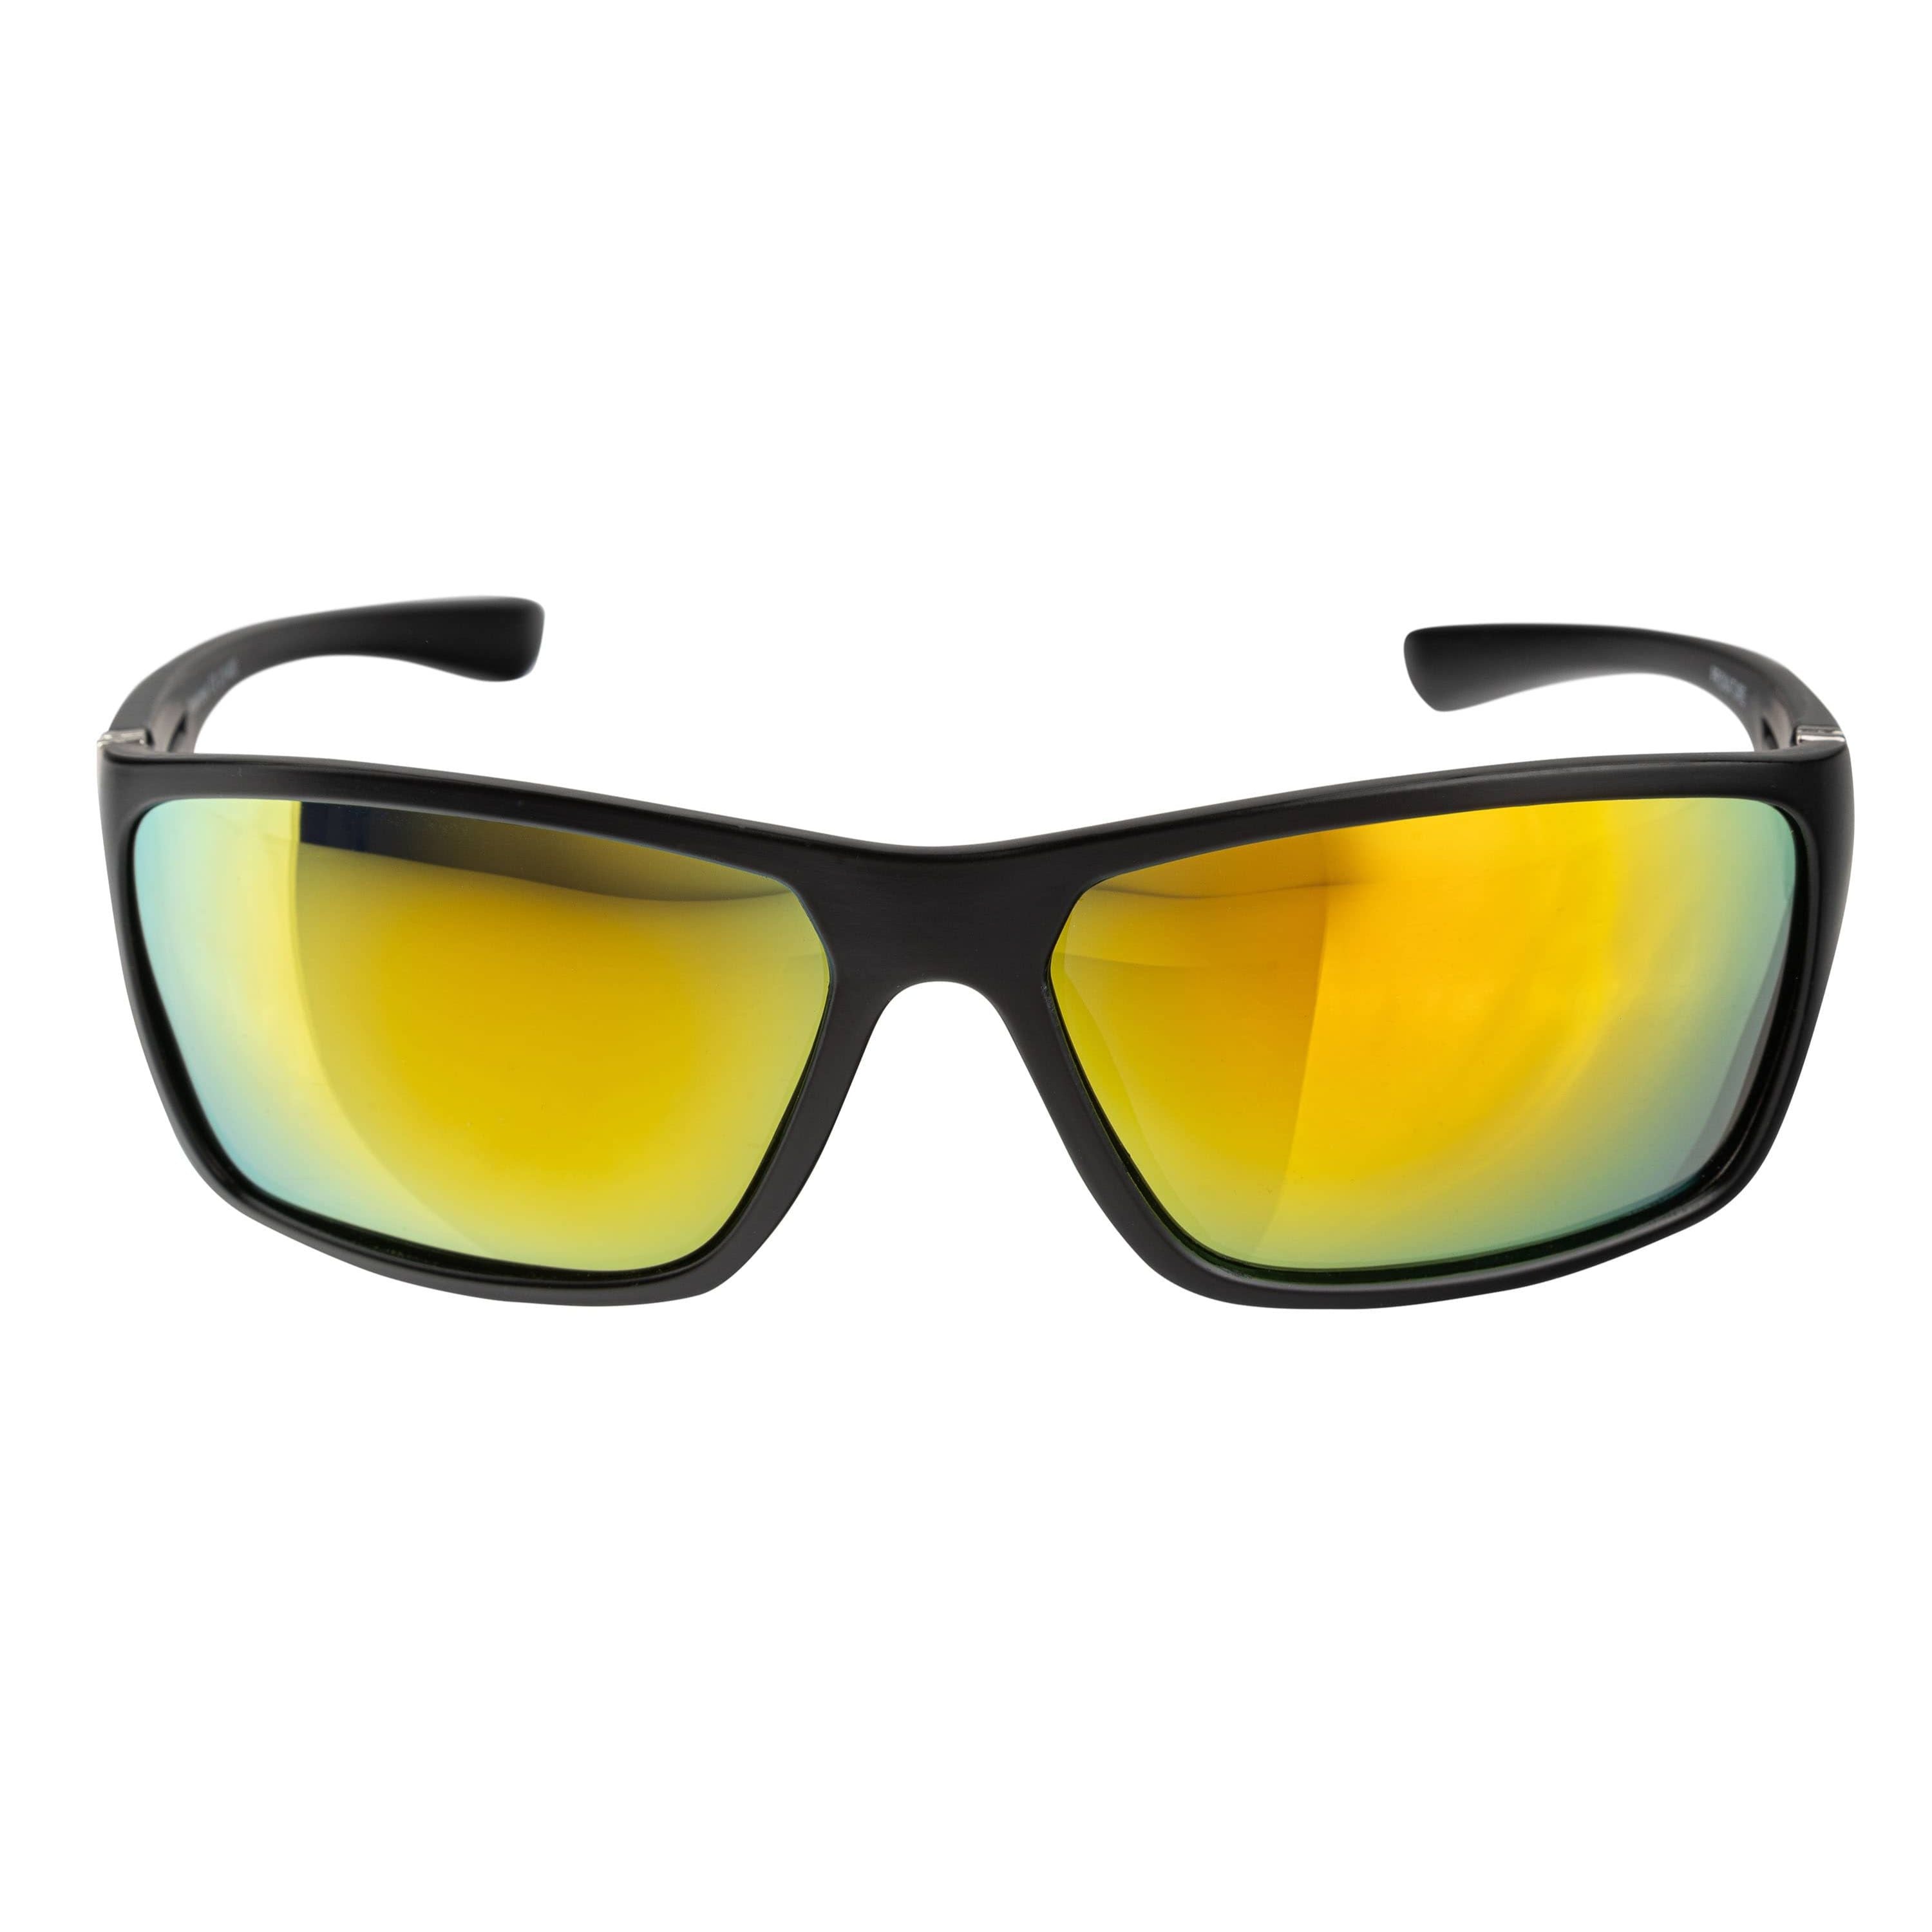 Polarized sunglasses - Adult